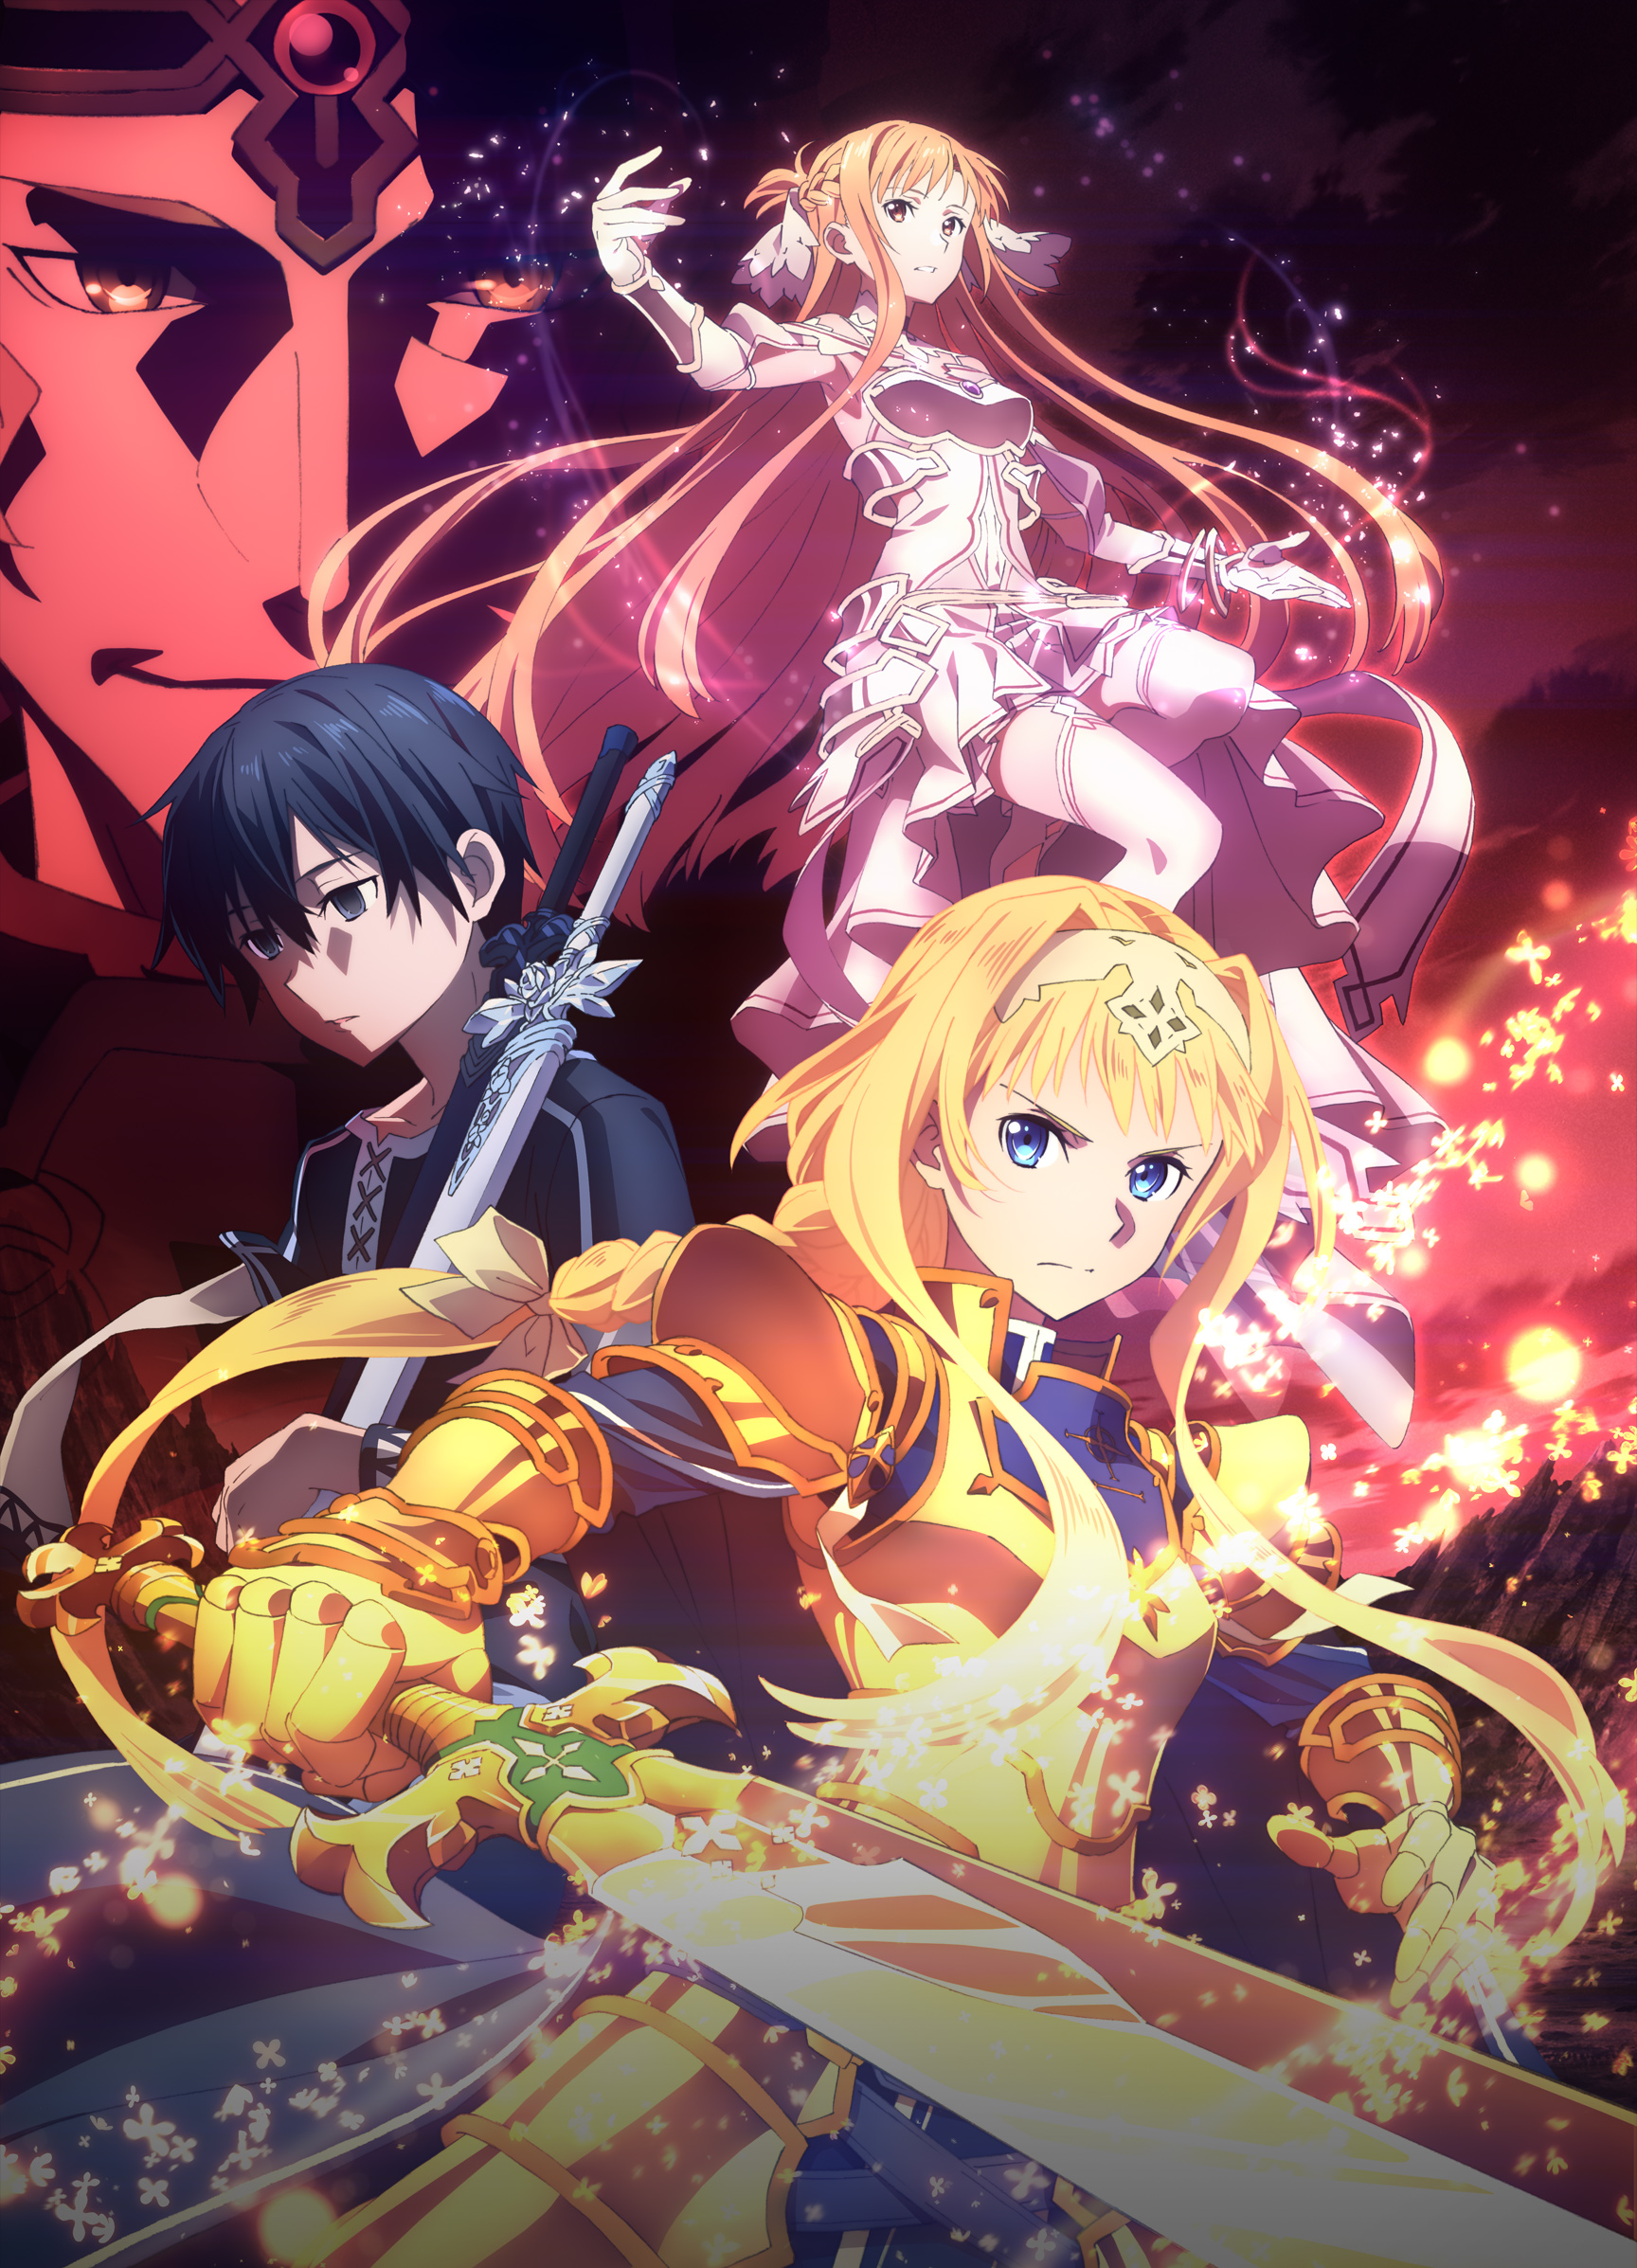 Sword Art Online ganha dublagem pela Funimation - AnimeNew